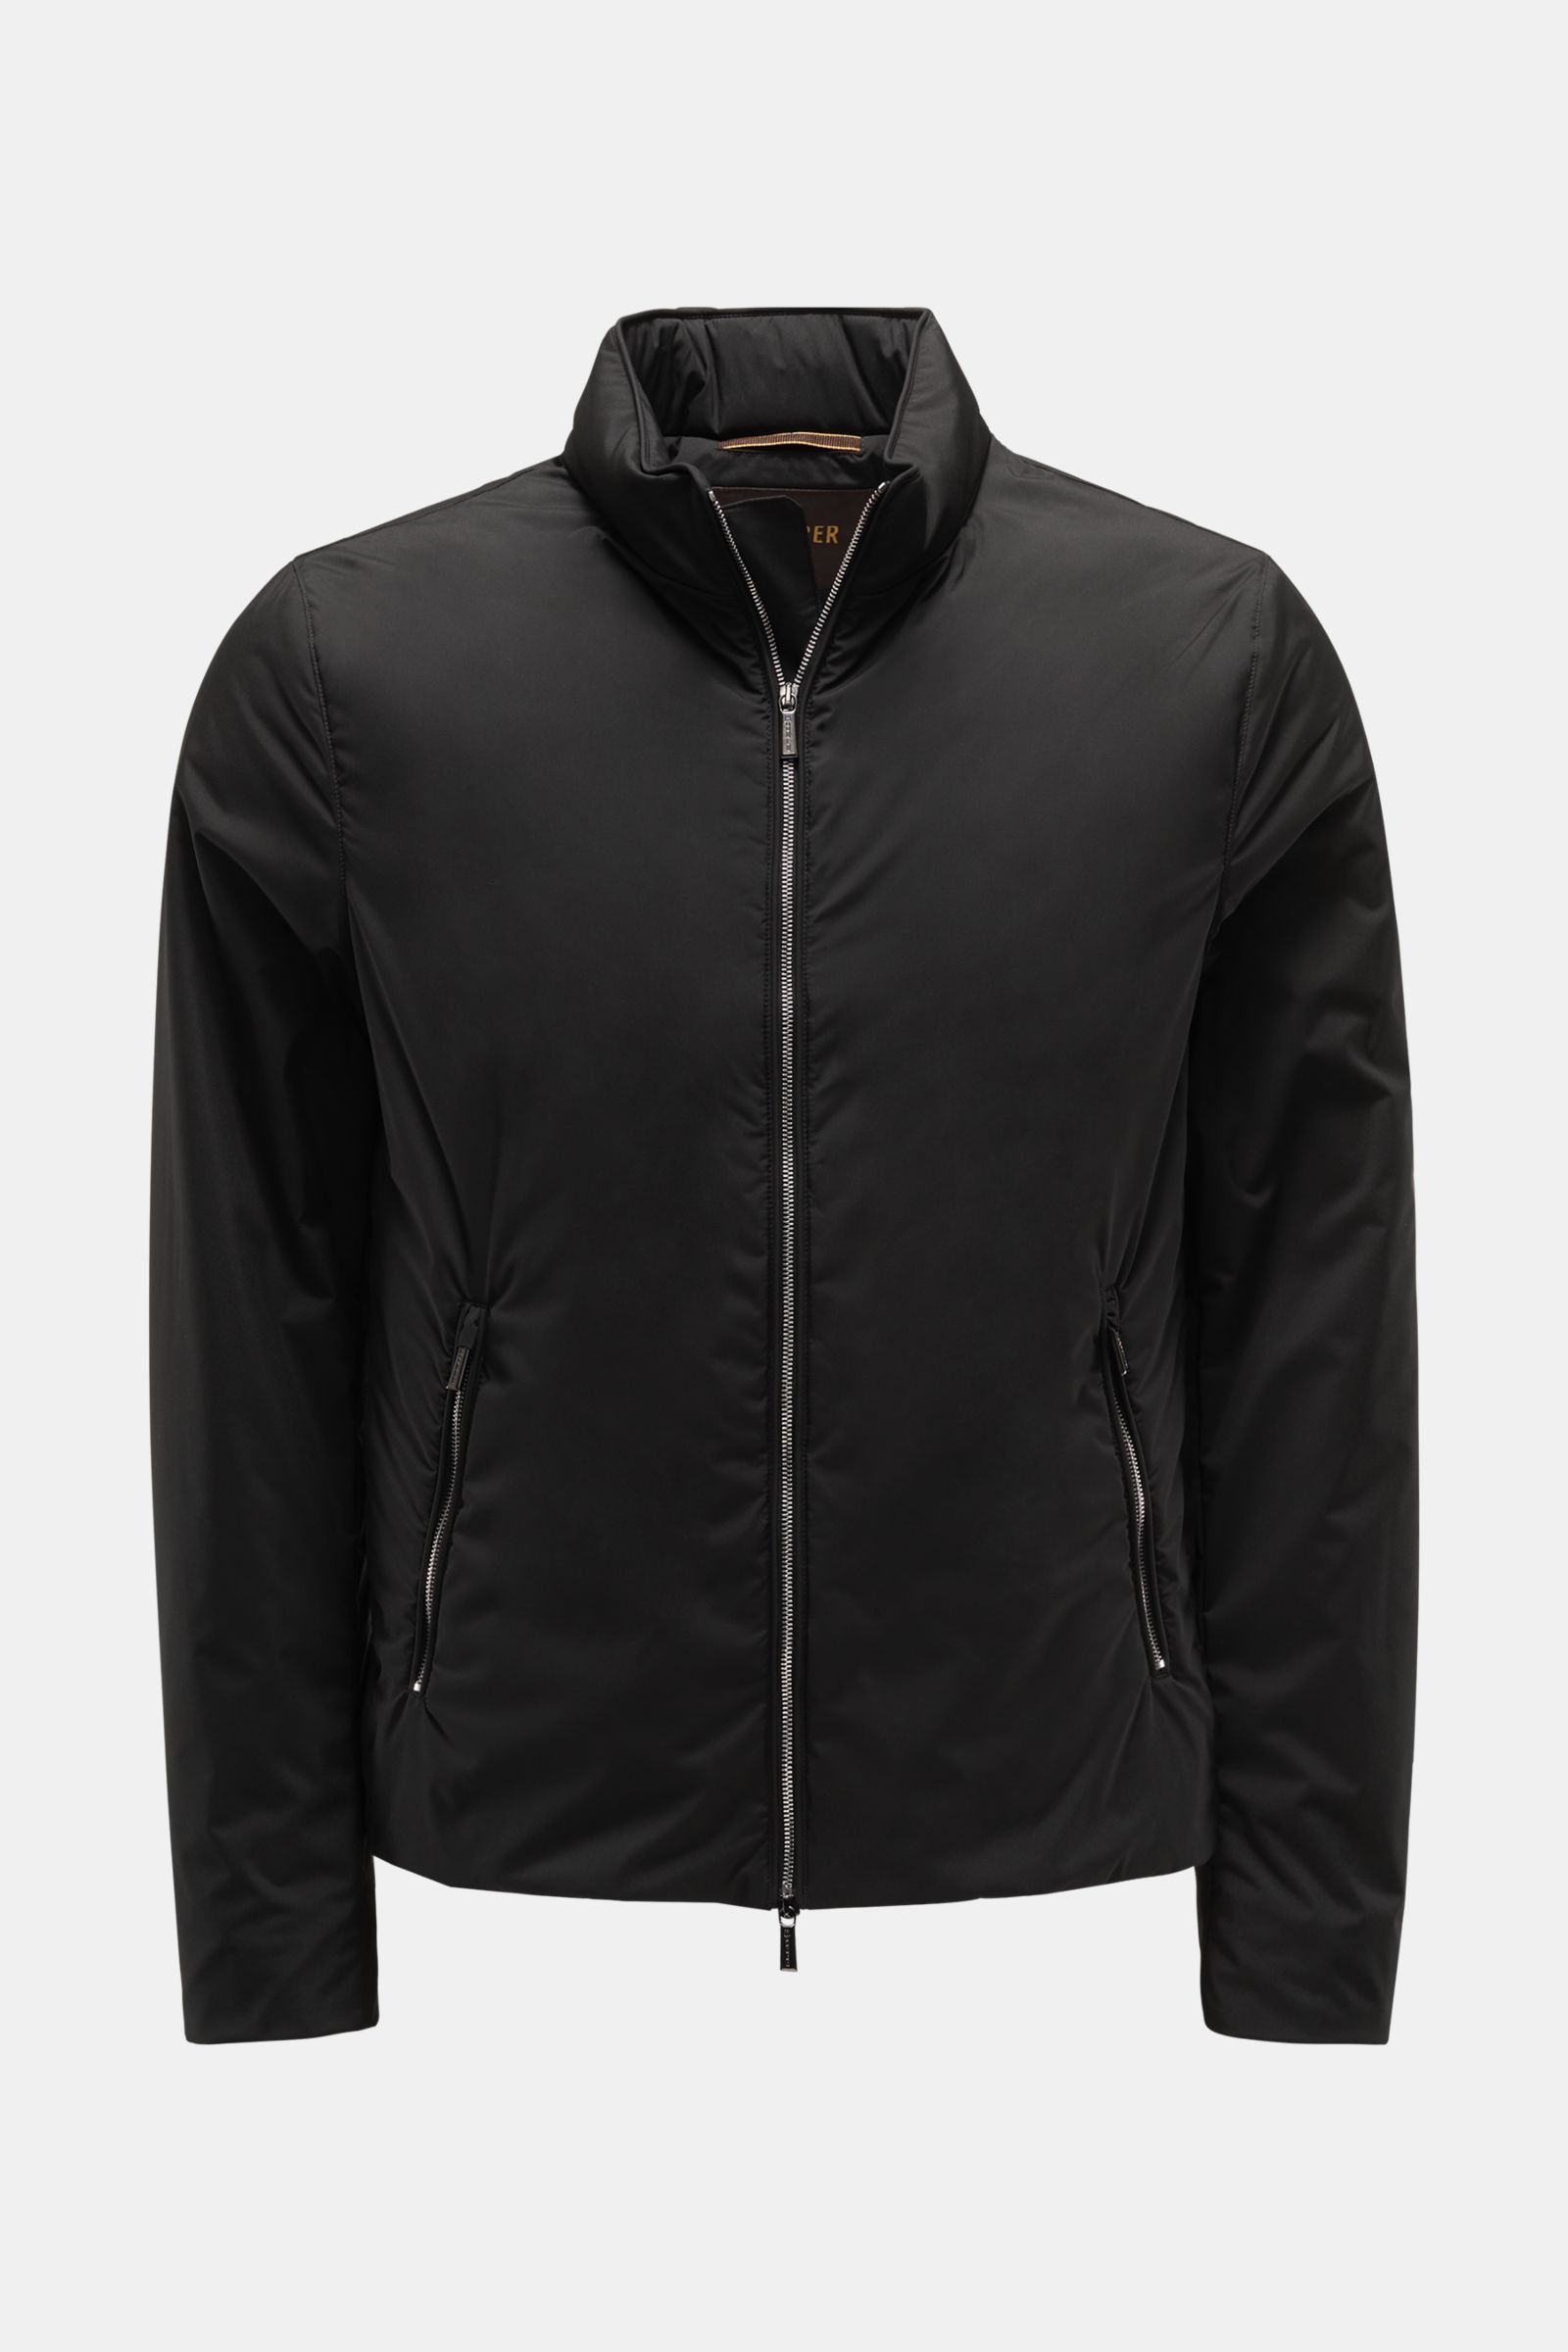 ‘Tristano' jacket black